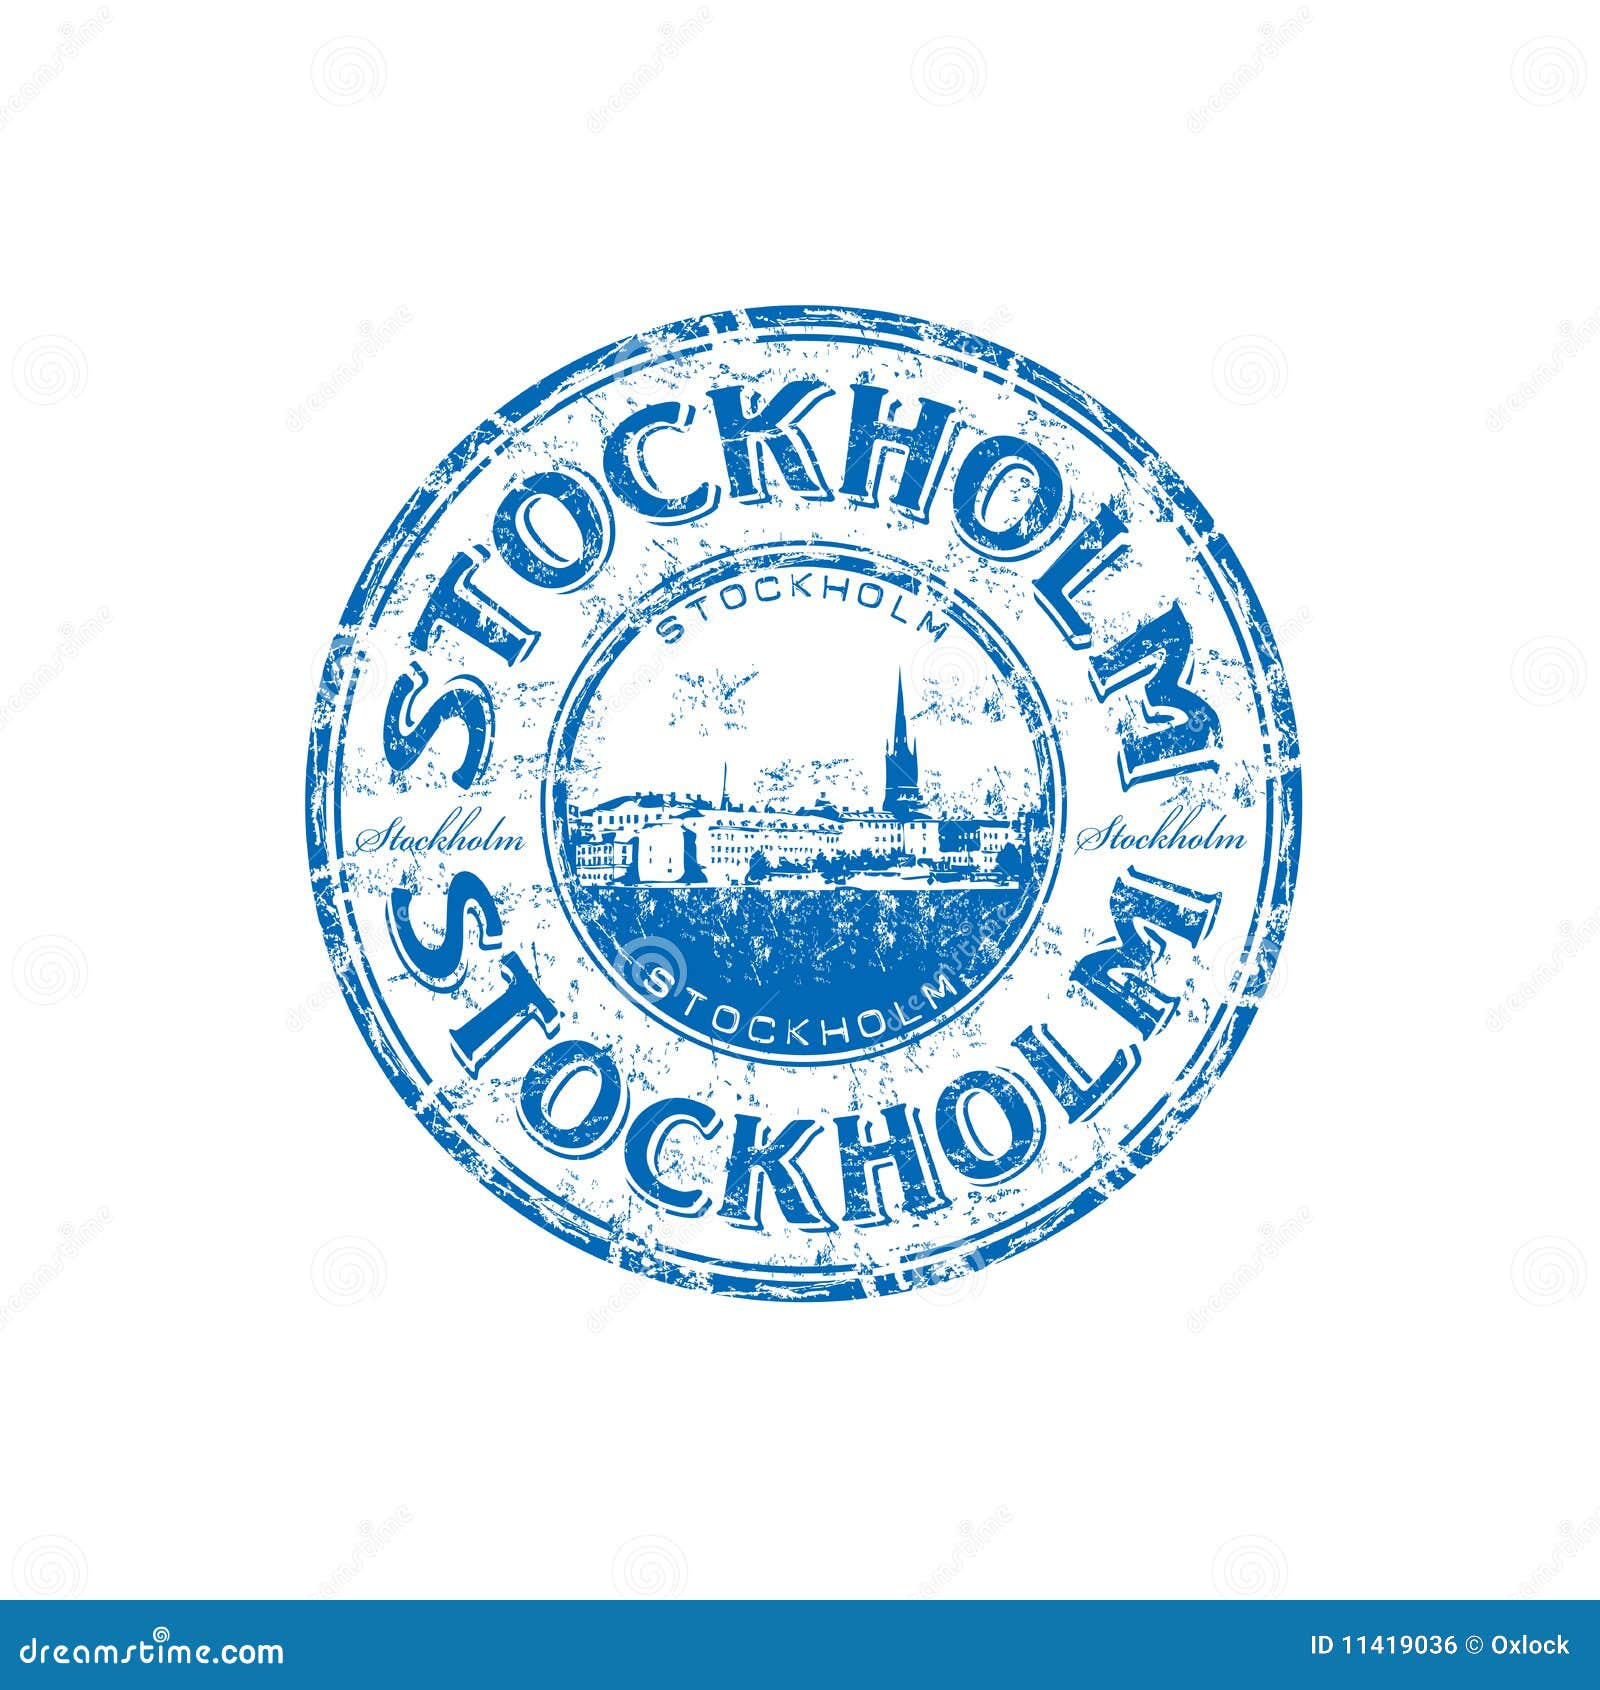 clipart stockholm - photo #39